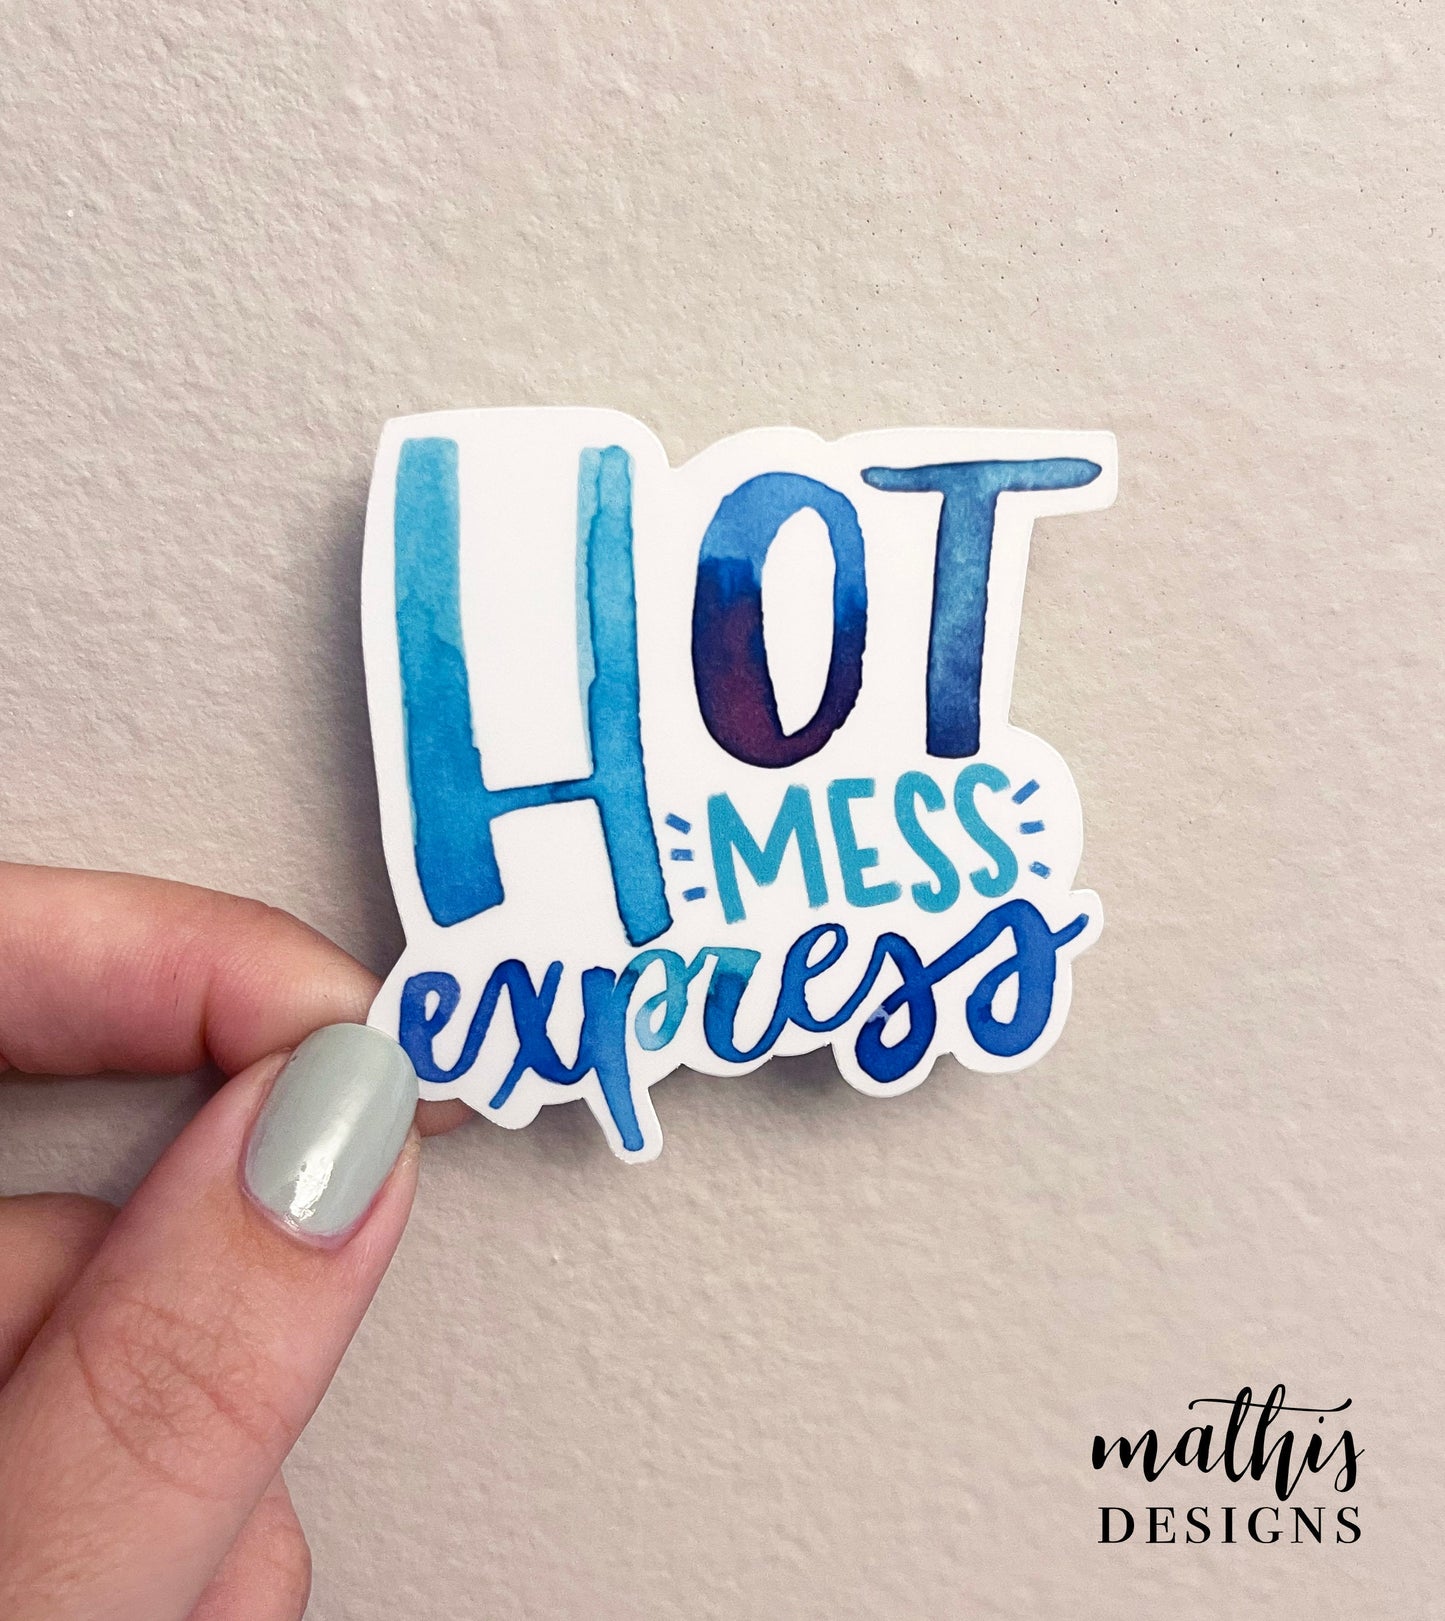 Hot Mess Express Sticker, Funny Water Bottle Sticker, Mom Life Sticker, Laptop Sticker, Gift